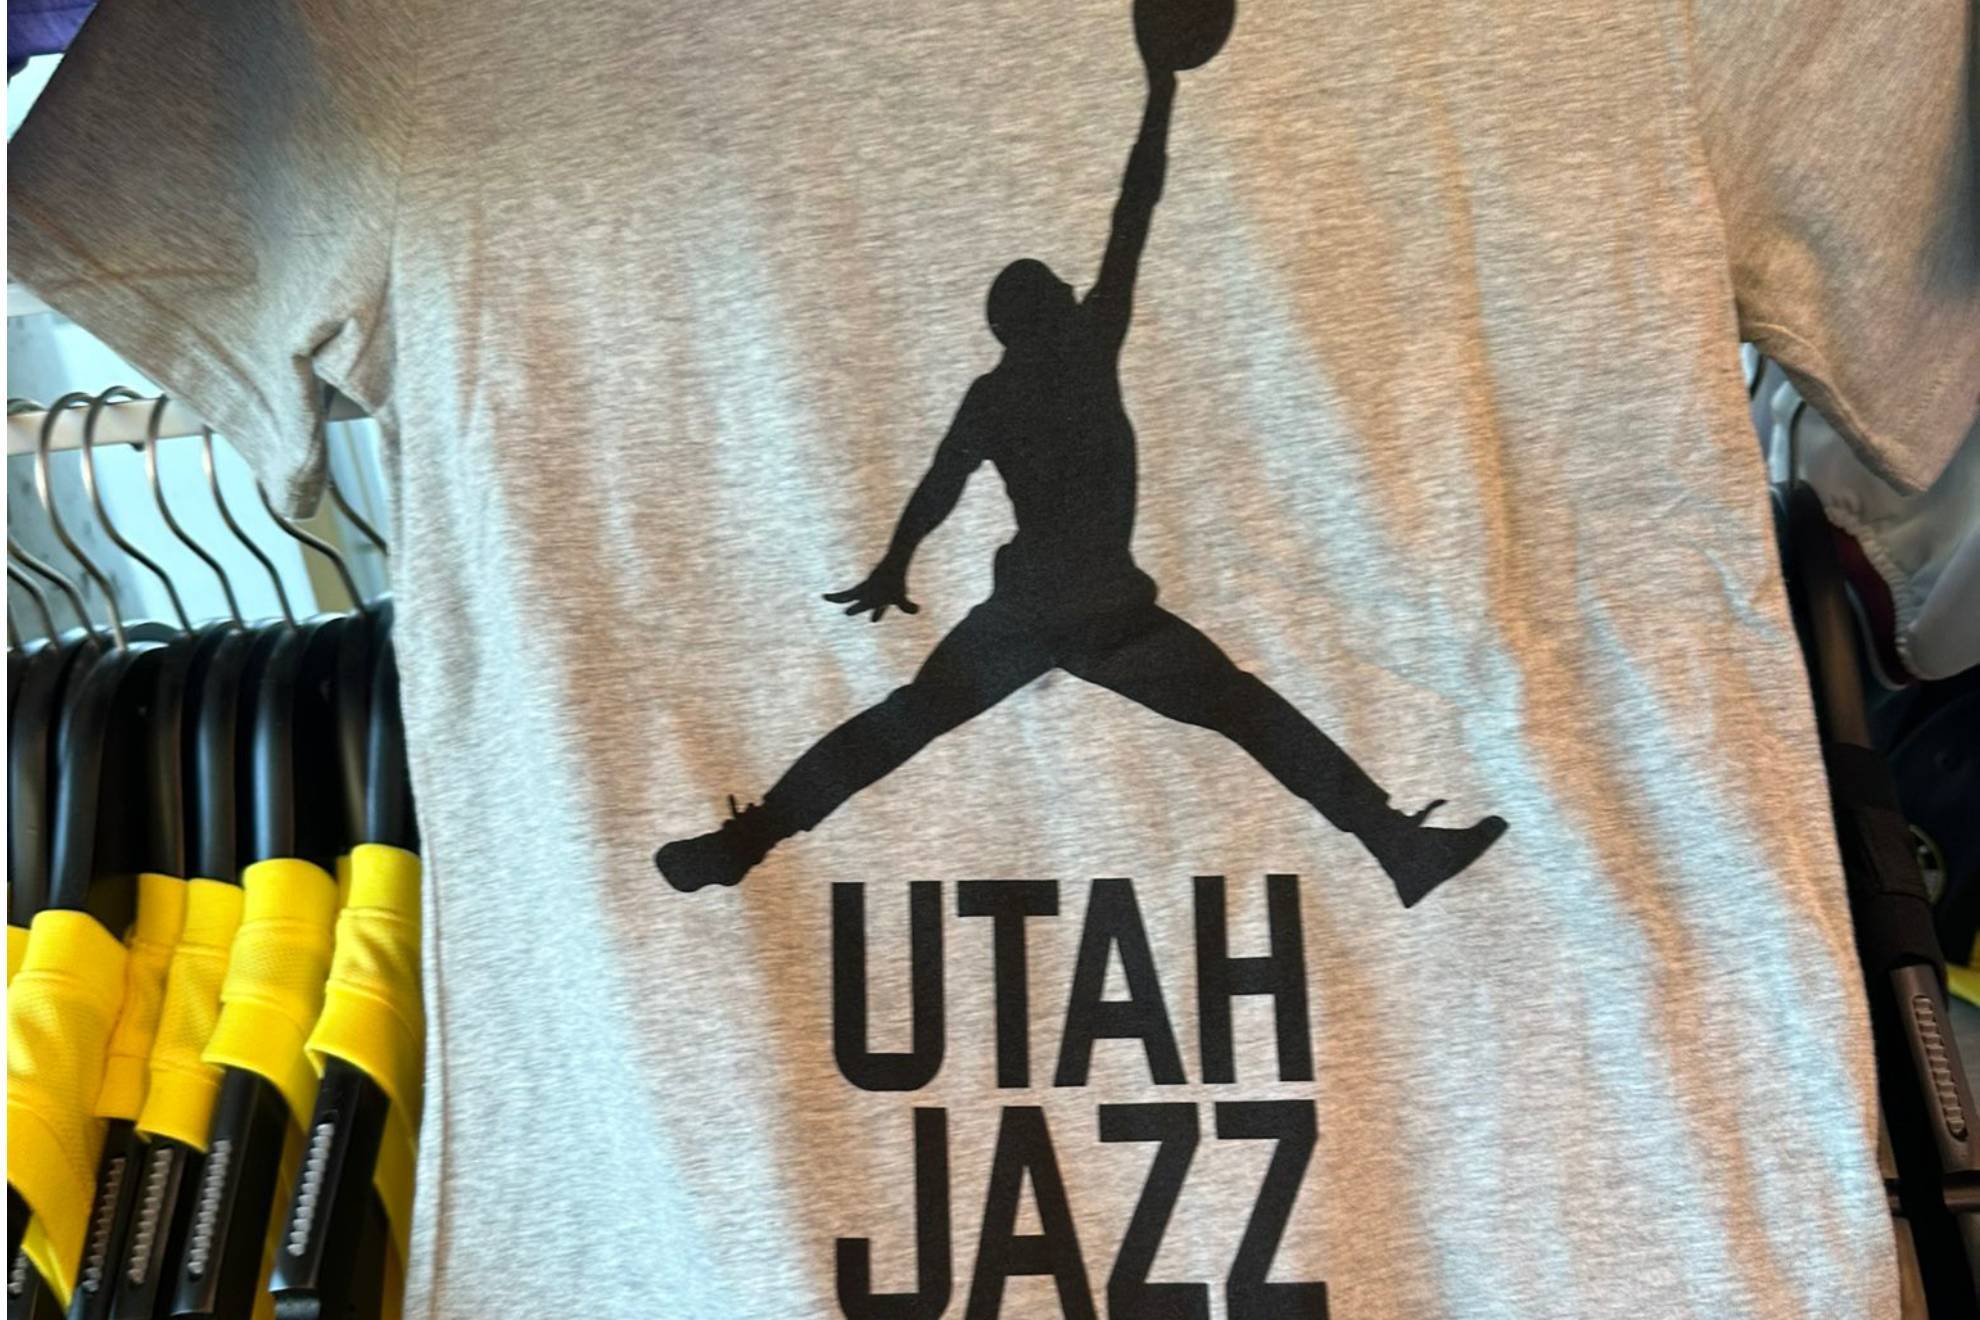 Utah Jazz pull shirts with Michael Jordan 'Jumpman' logo